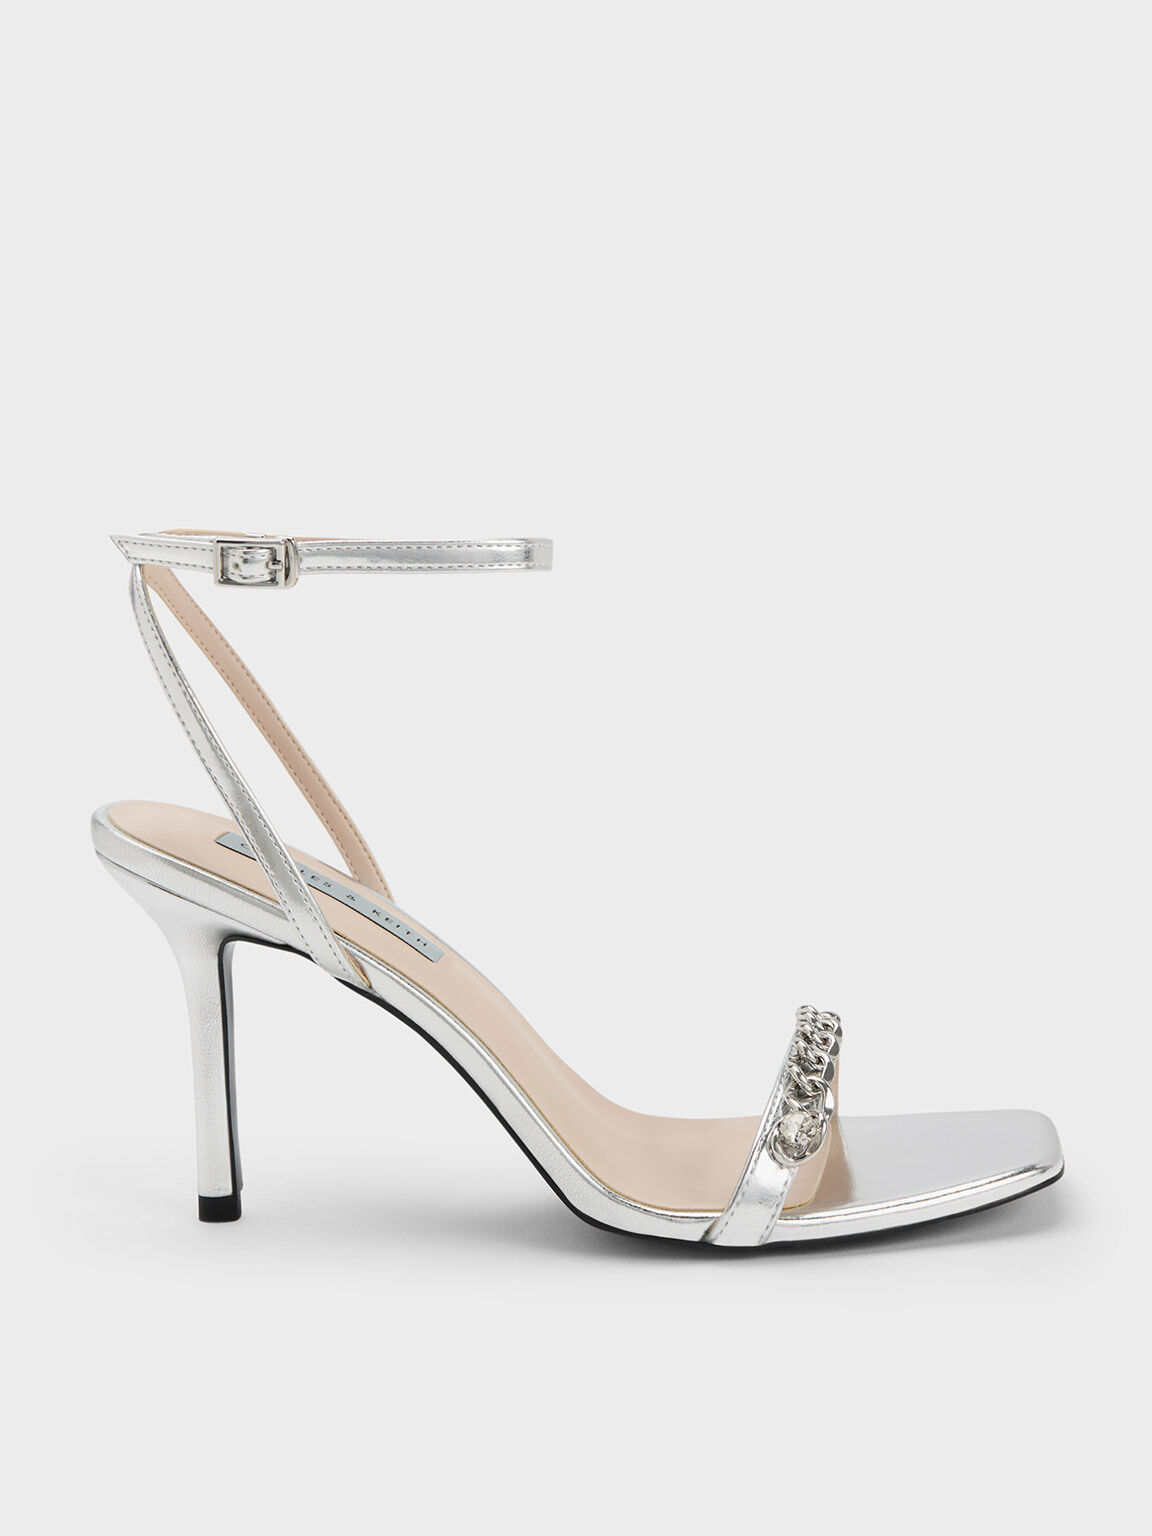 Womens Fashion Sandals Peep Toe Chain Ankle Strap Summer Stiletto Heel Shoes  Pum | eBay